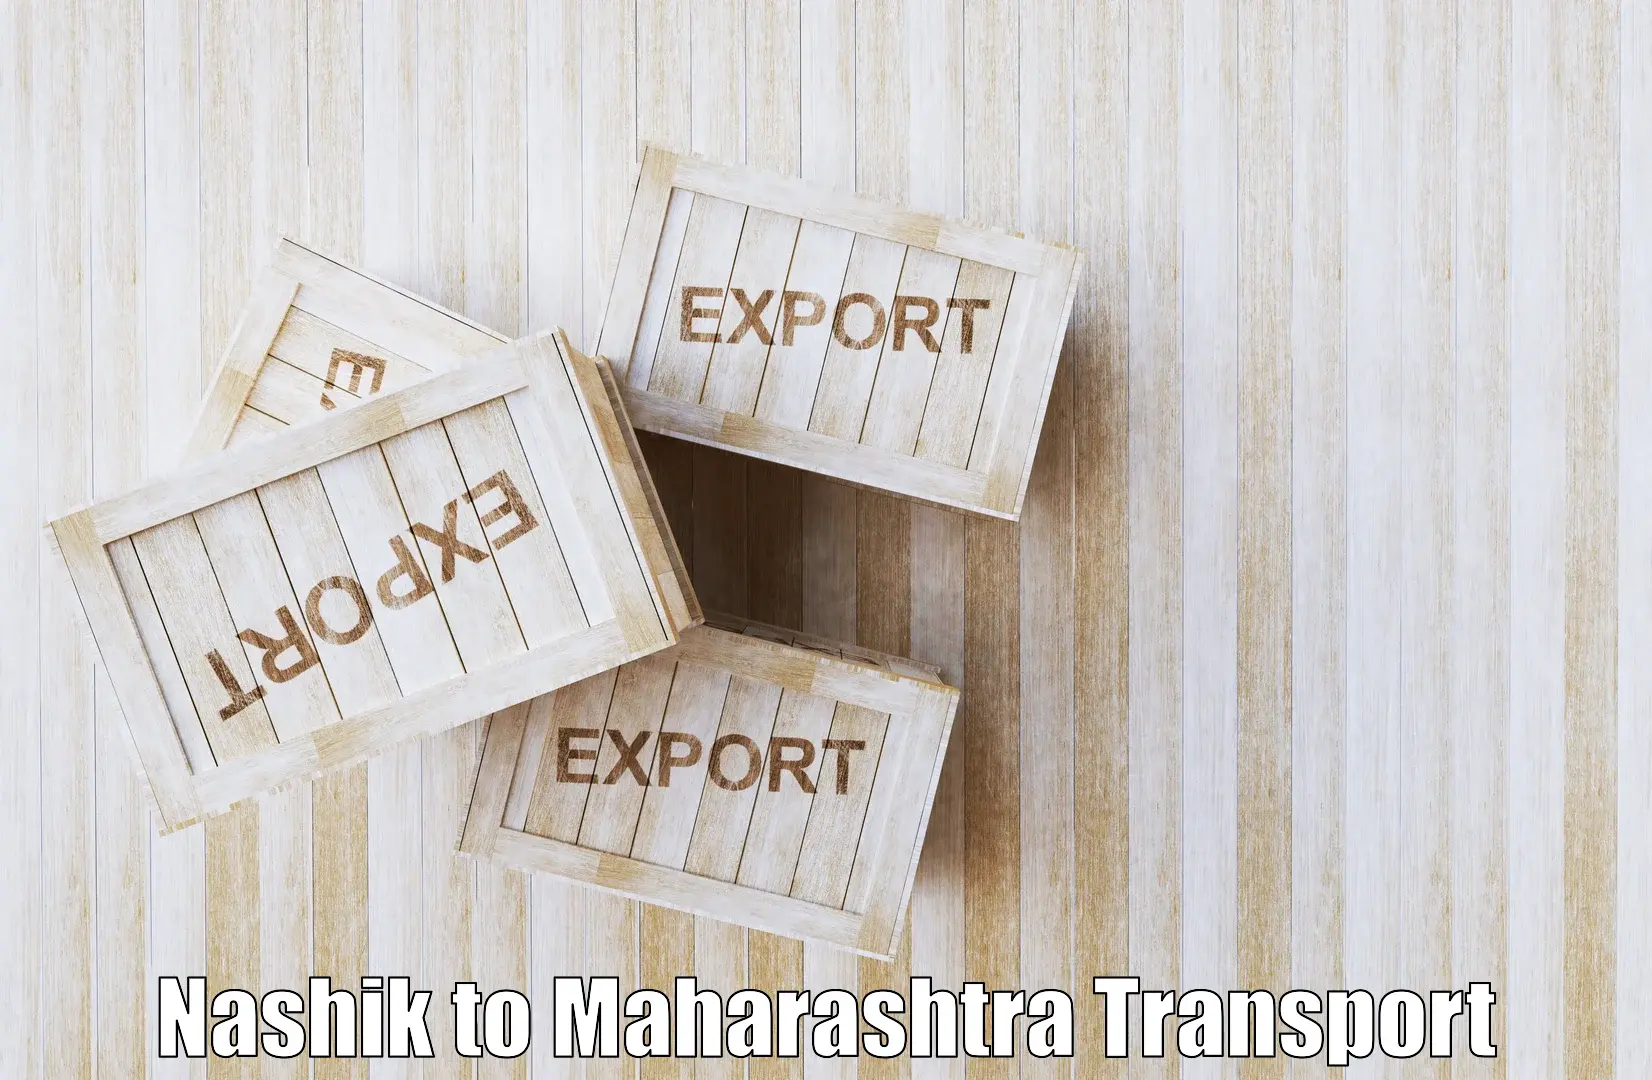 Transport in sharing Nashik to Nanded